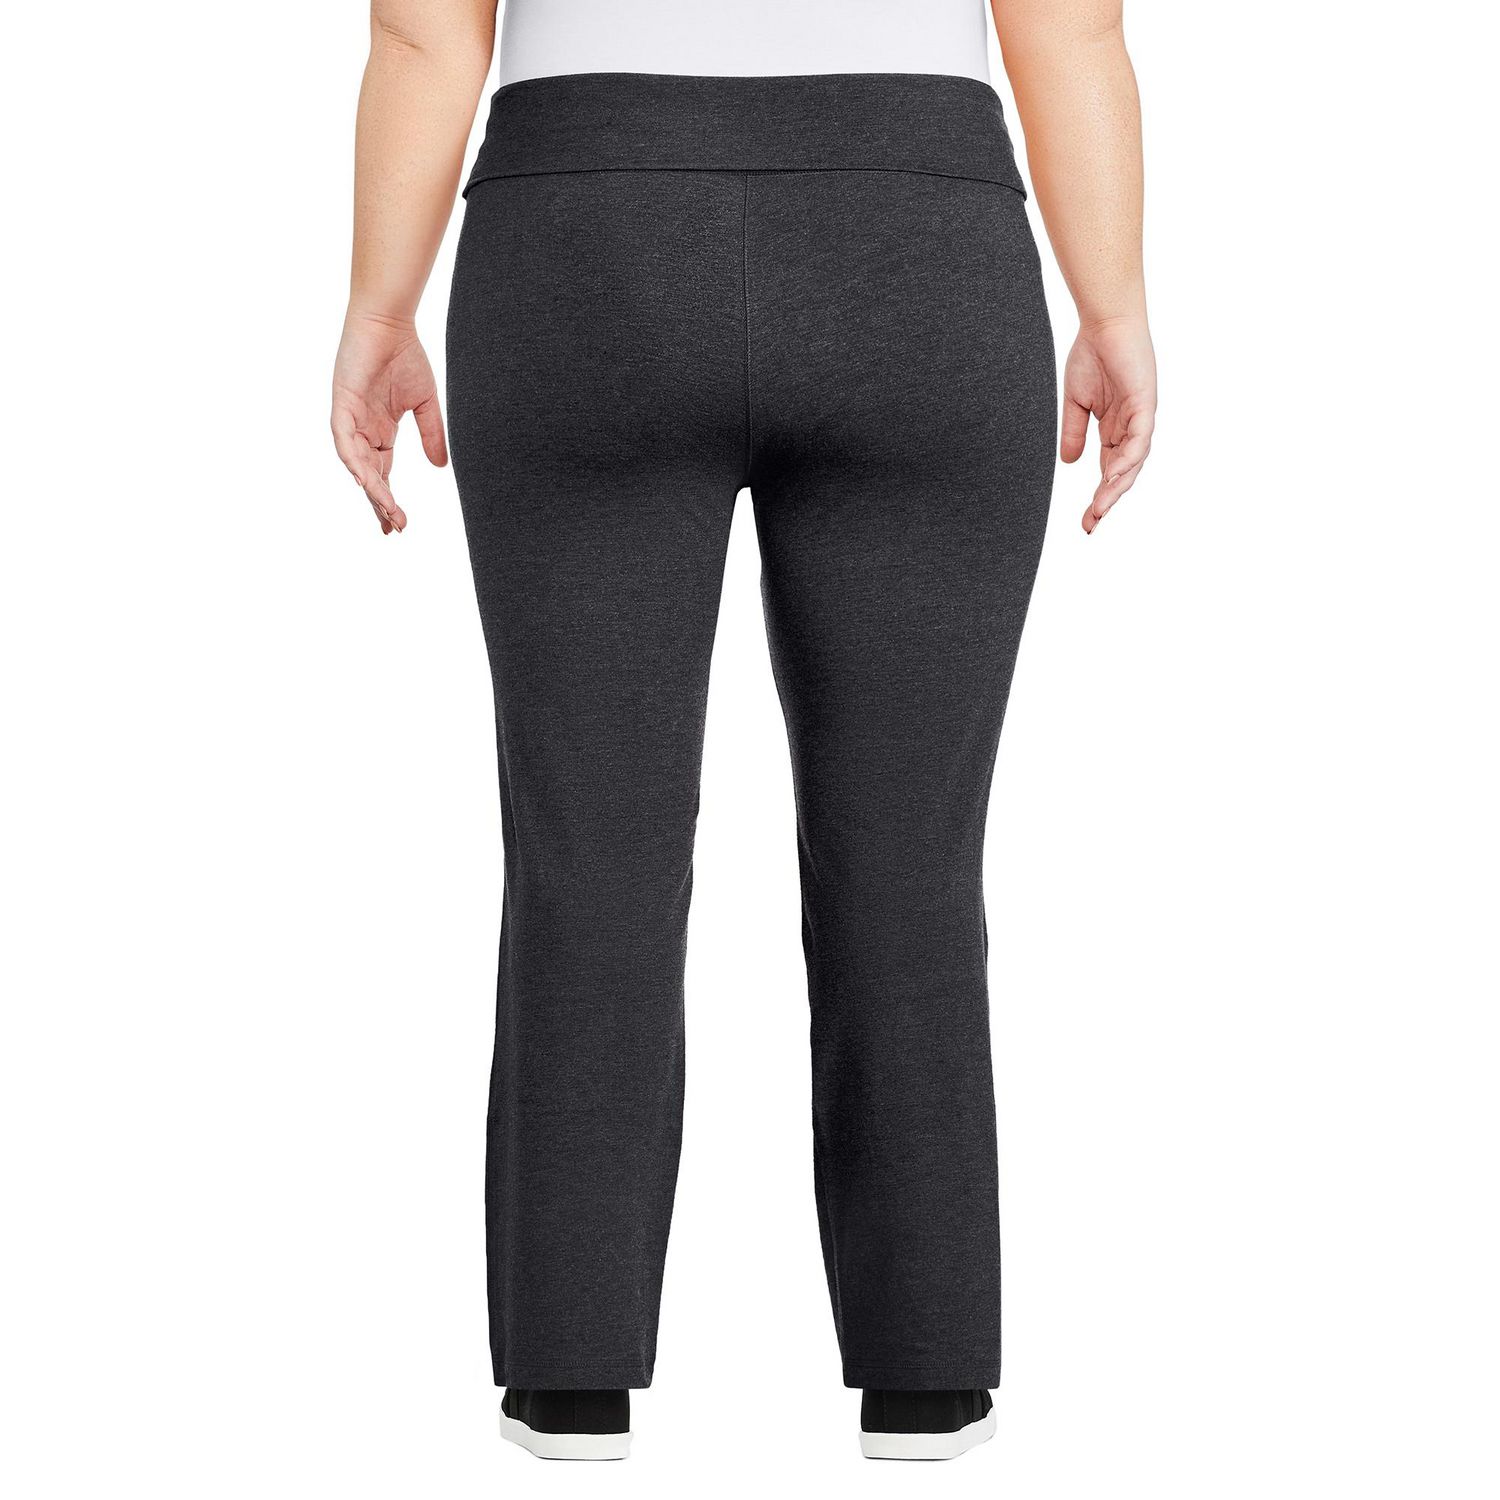 Dropship Plus Size Workout Pants Women Gridles Pants Bottoming